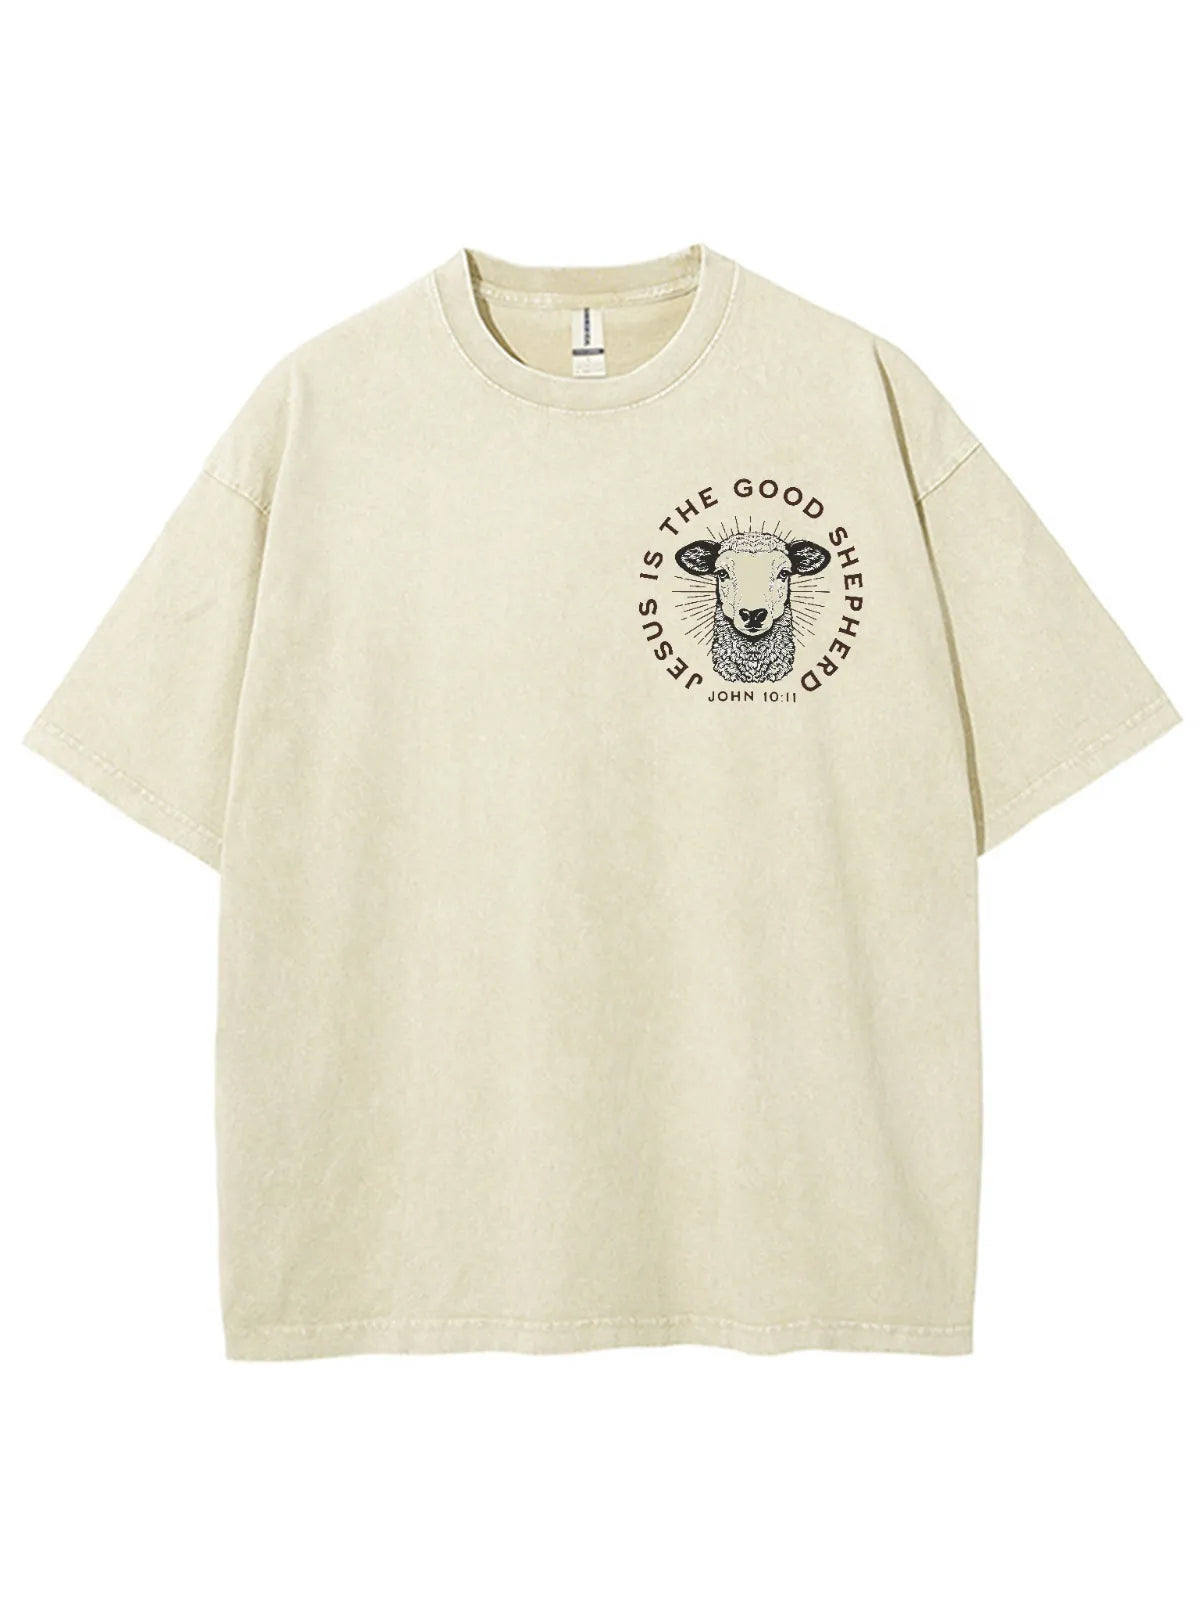 Retro Sheep Print Washed Cotton Men's Short-Sleeved Round Neck T-Shirt